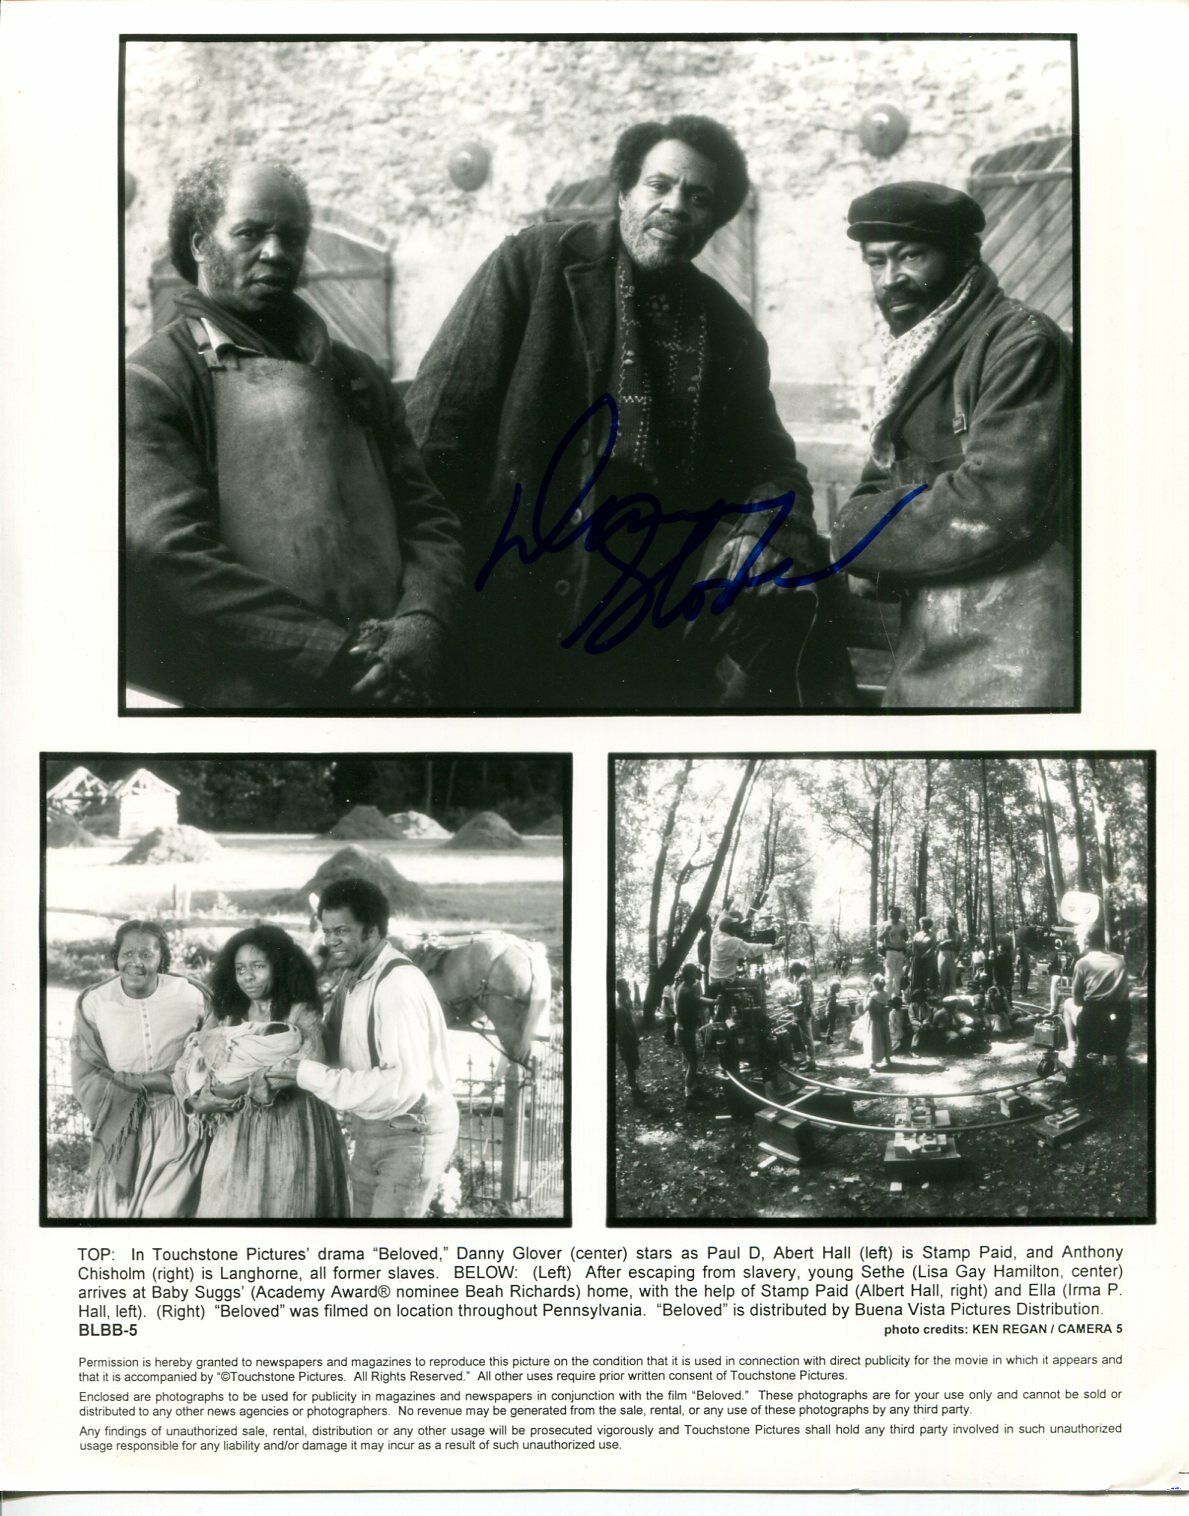 Danny Glover Beloved Signed Autograph Original Press Movie Still Photo